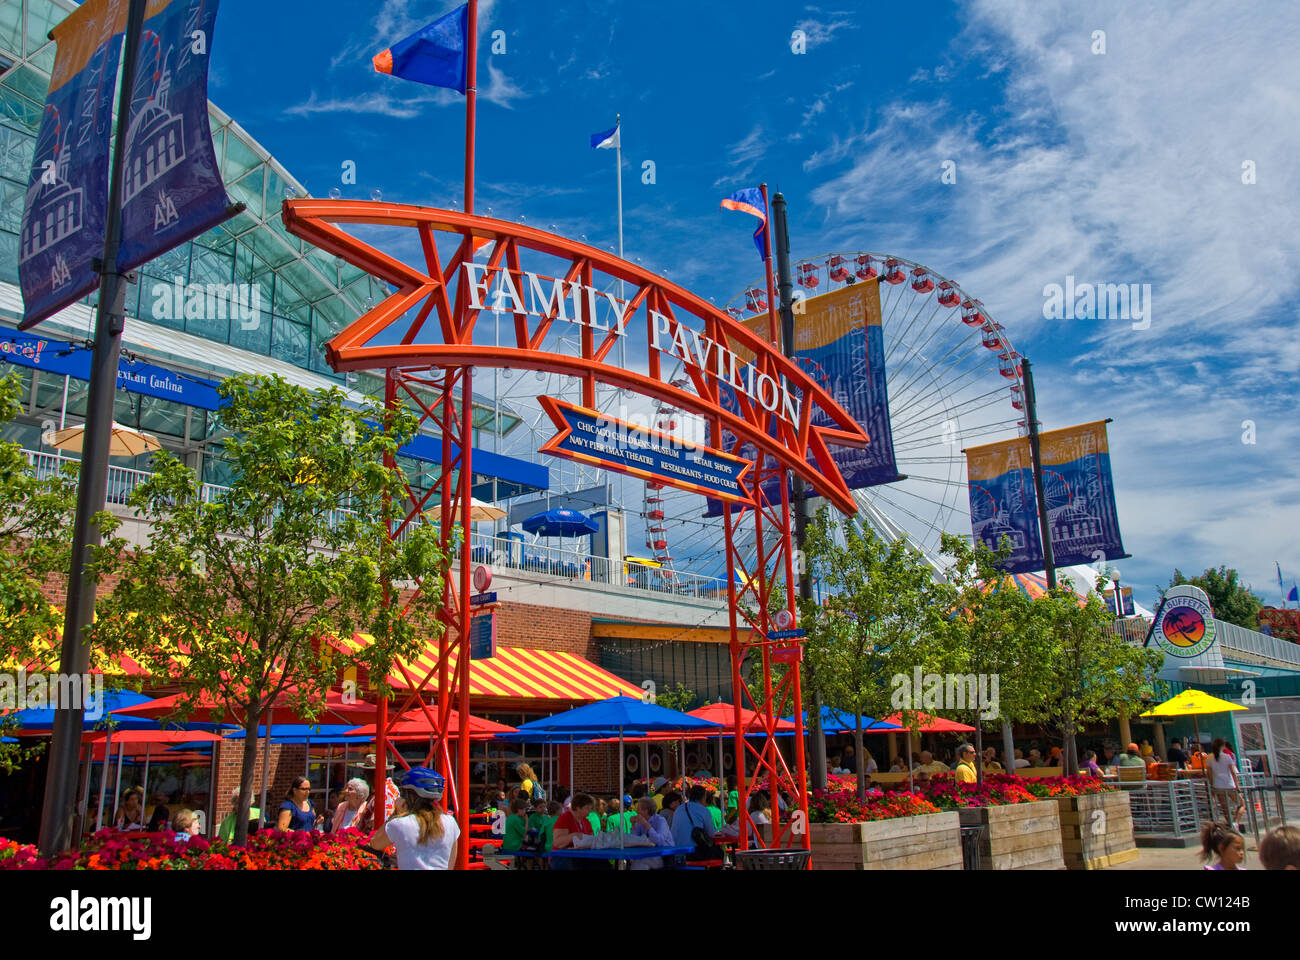 Family Pavilion at Navy Pier with Ferris Wheel and Jimmy Buffett's Margaritaville restaurant in Chicago, Illinois Stock Photo